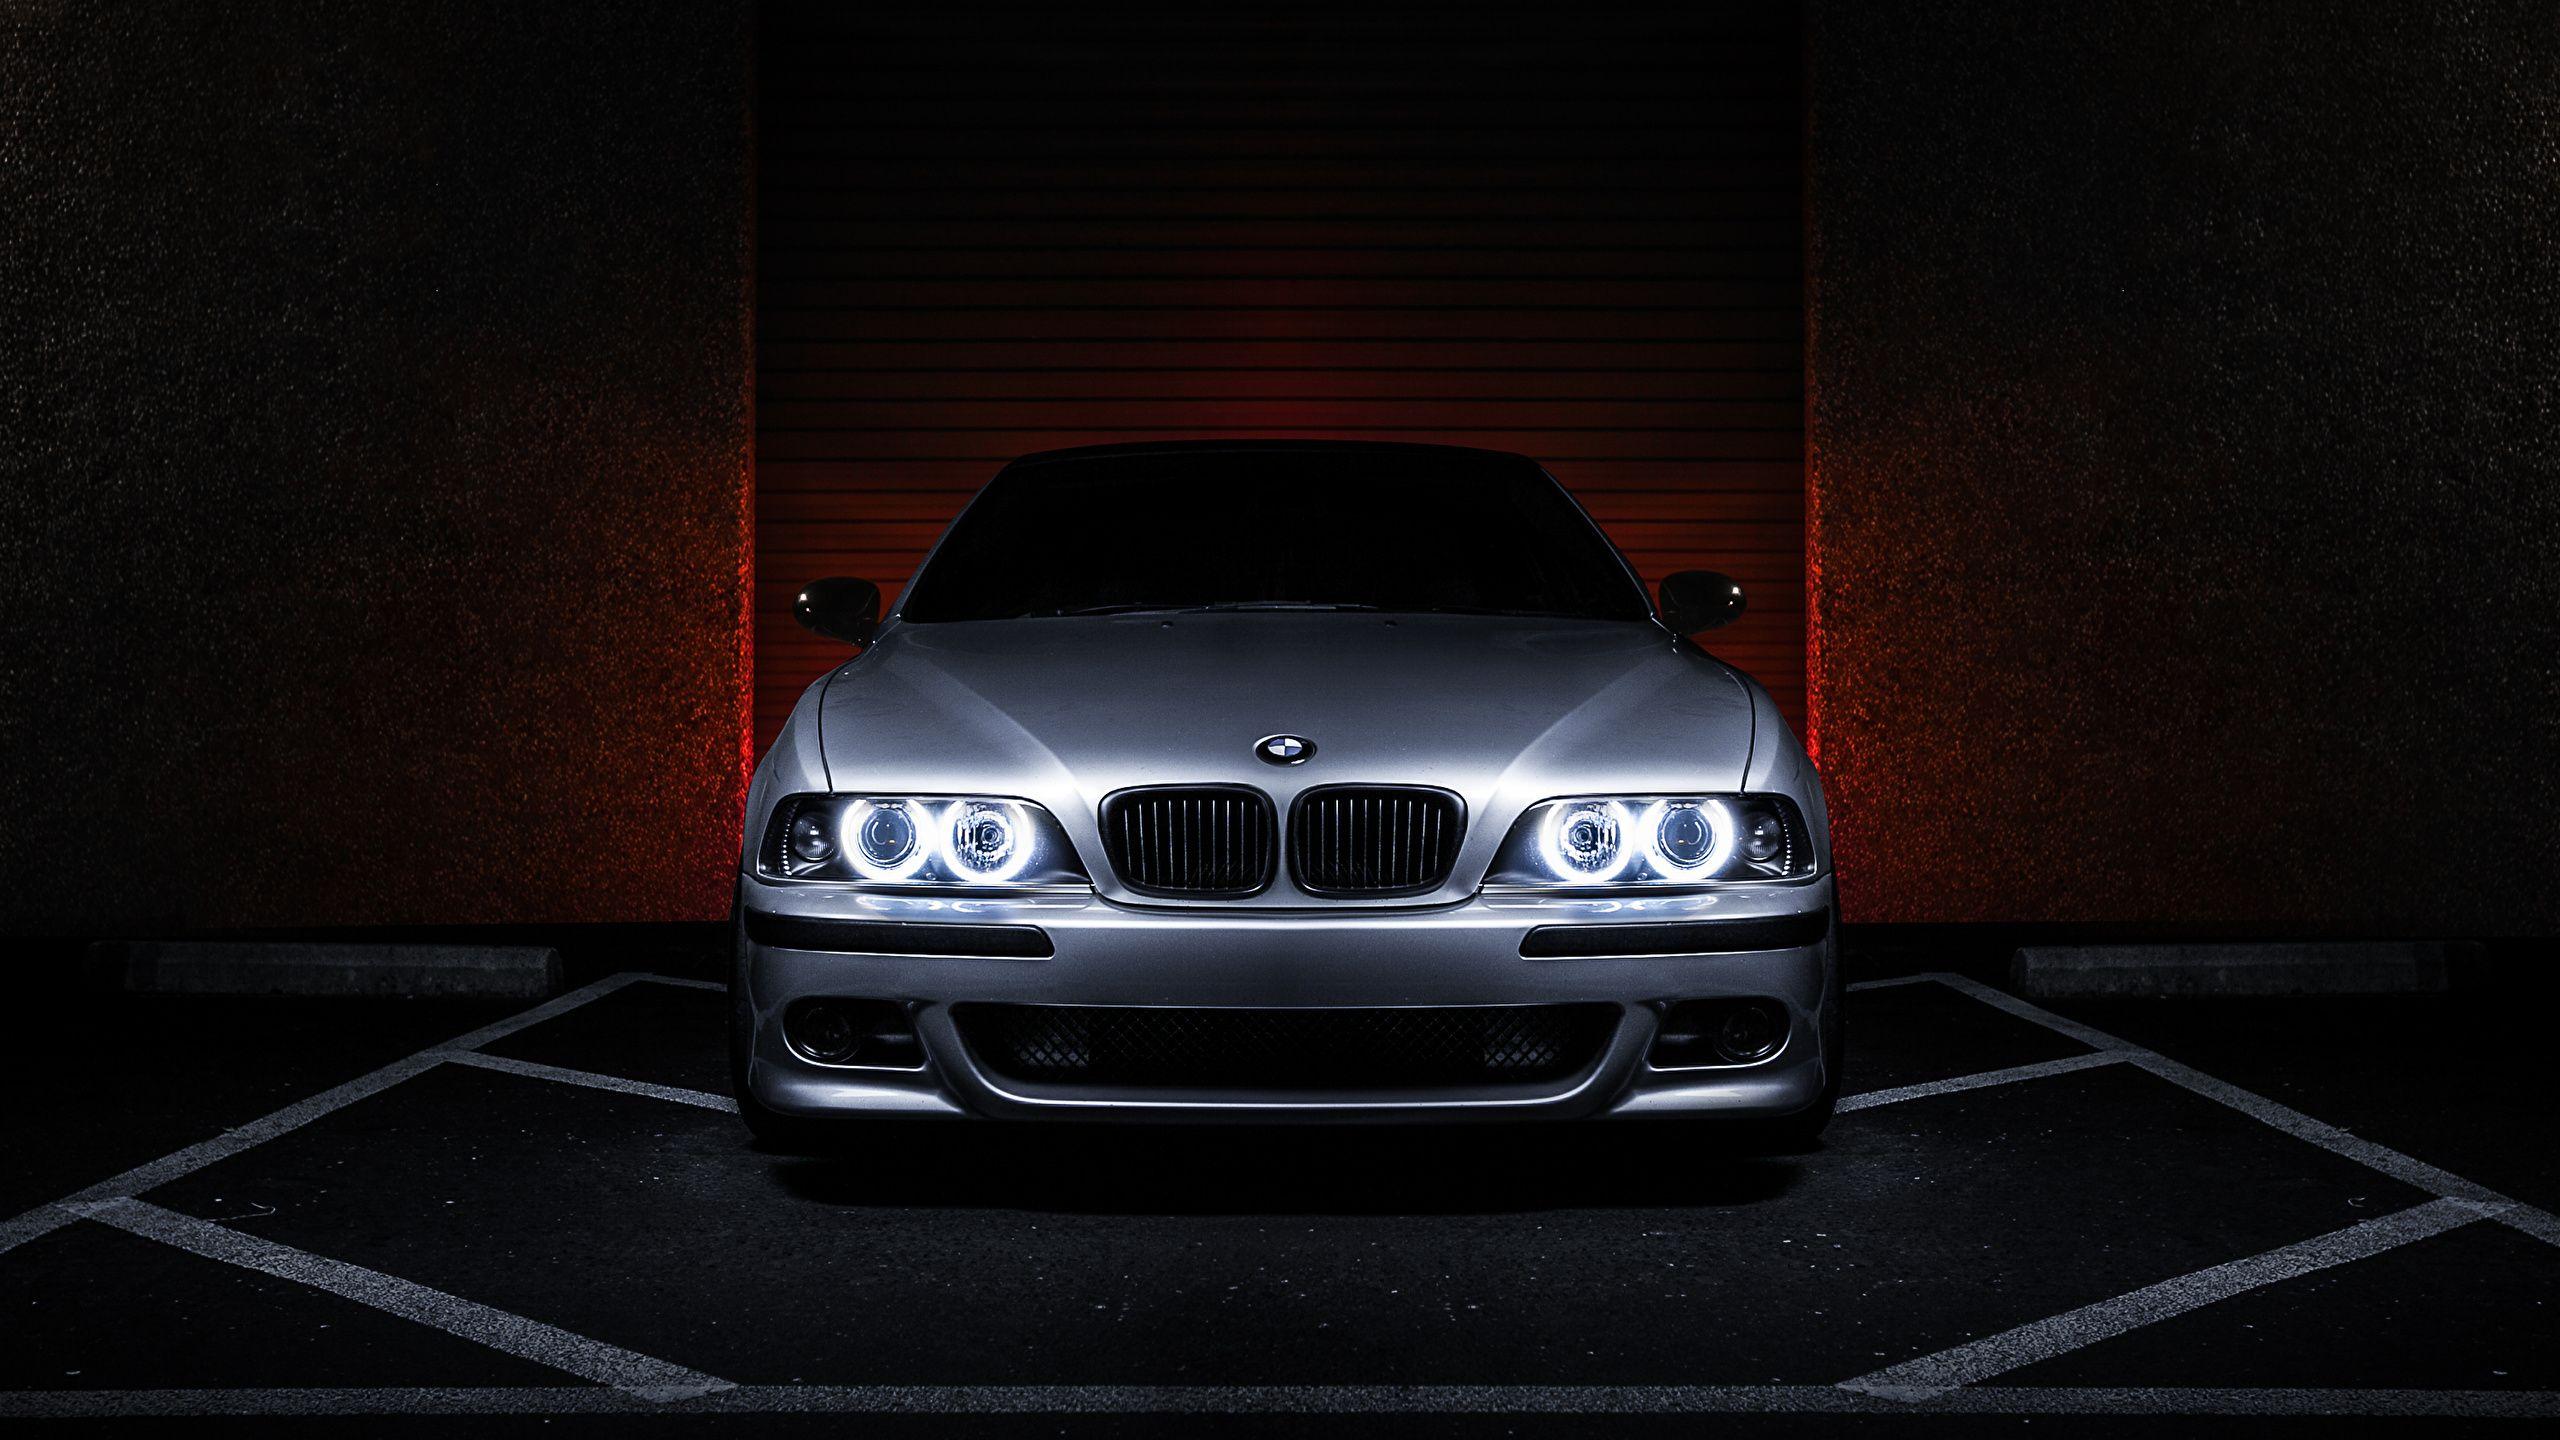 Photo BMW E39 540i Silver color Cars Front 2560x1440